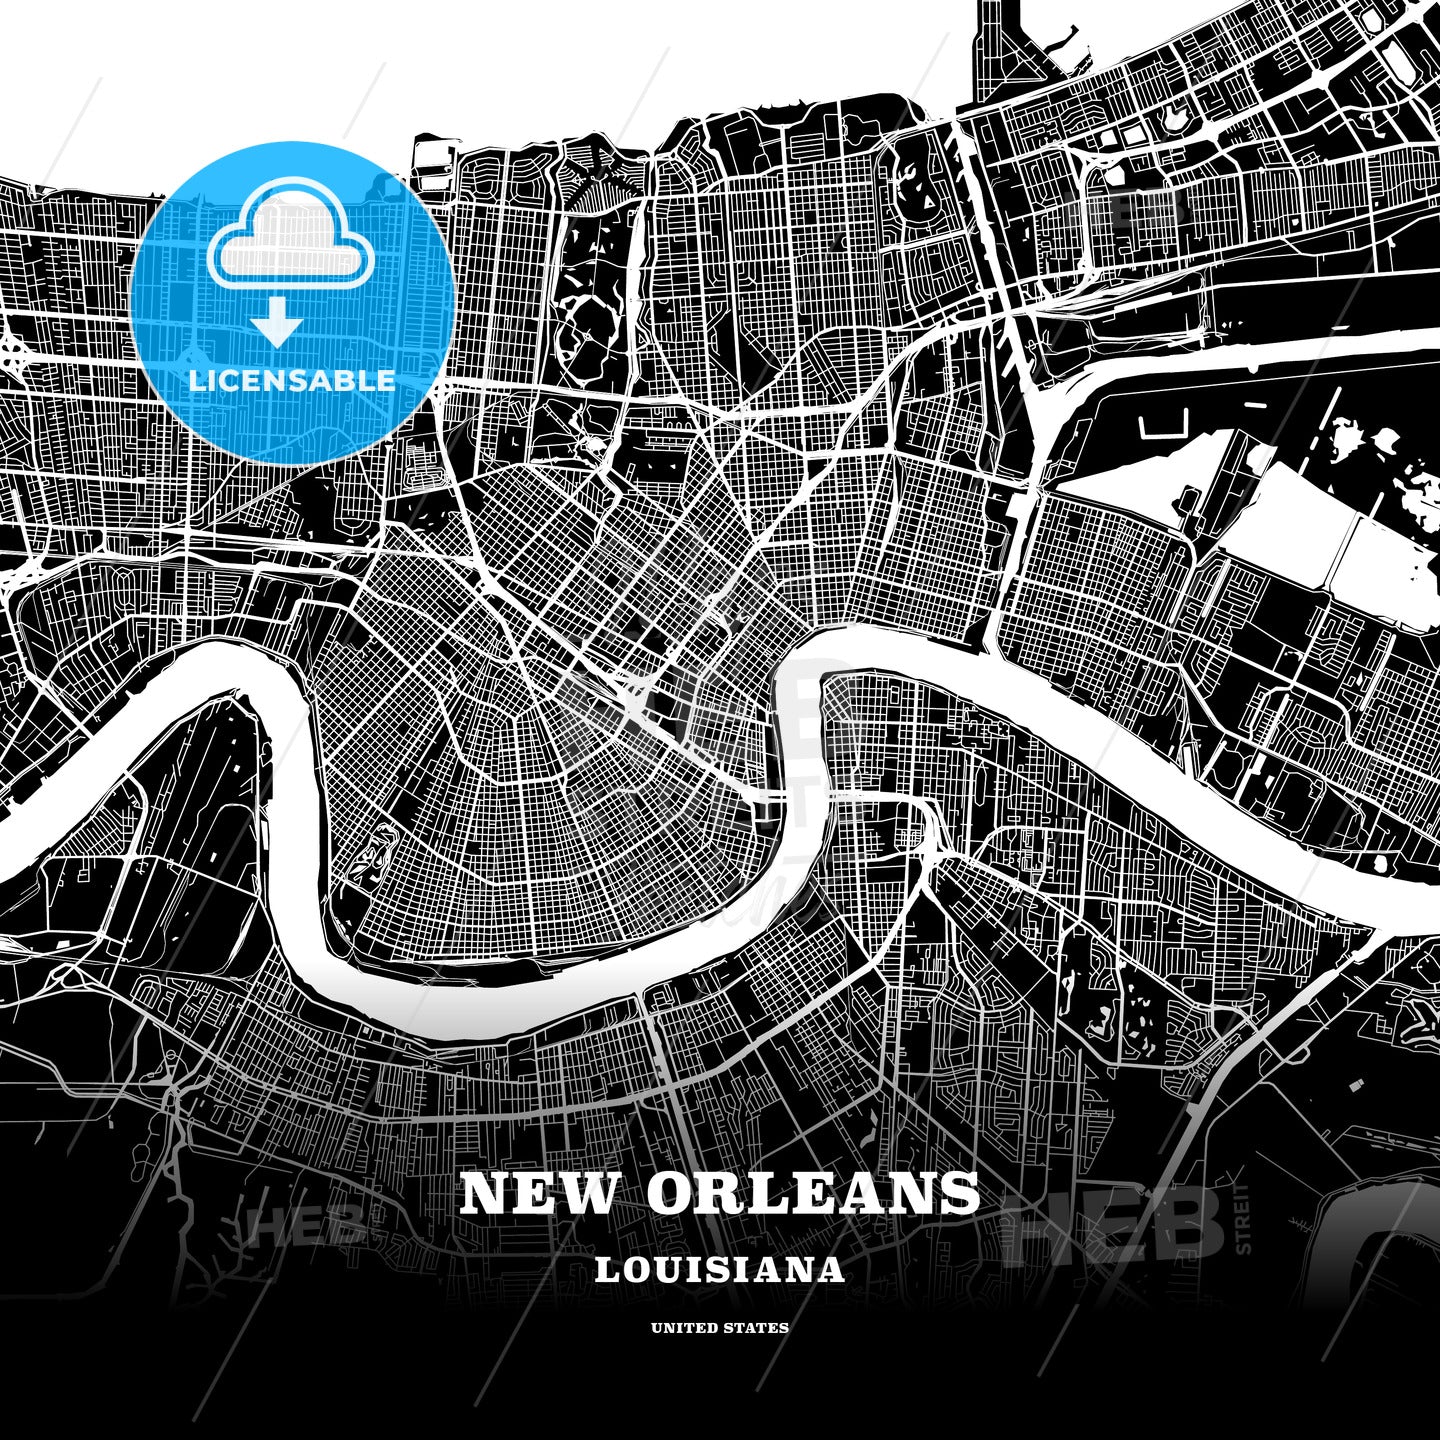 New Orleans, Louisiana, USA map